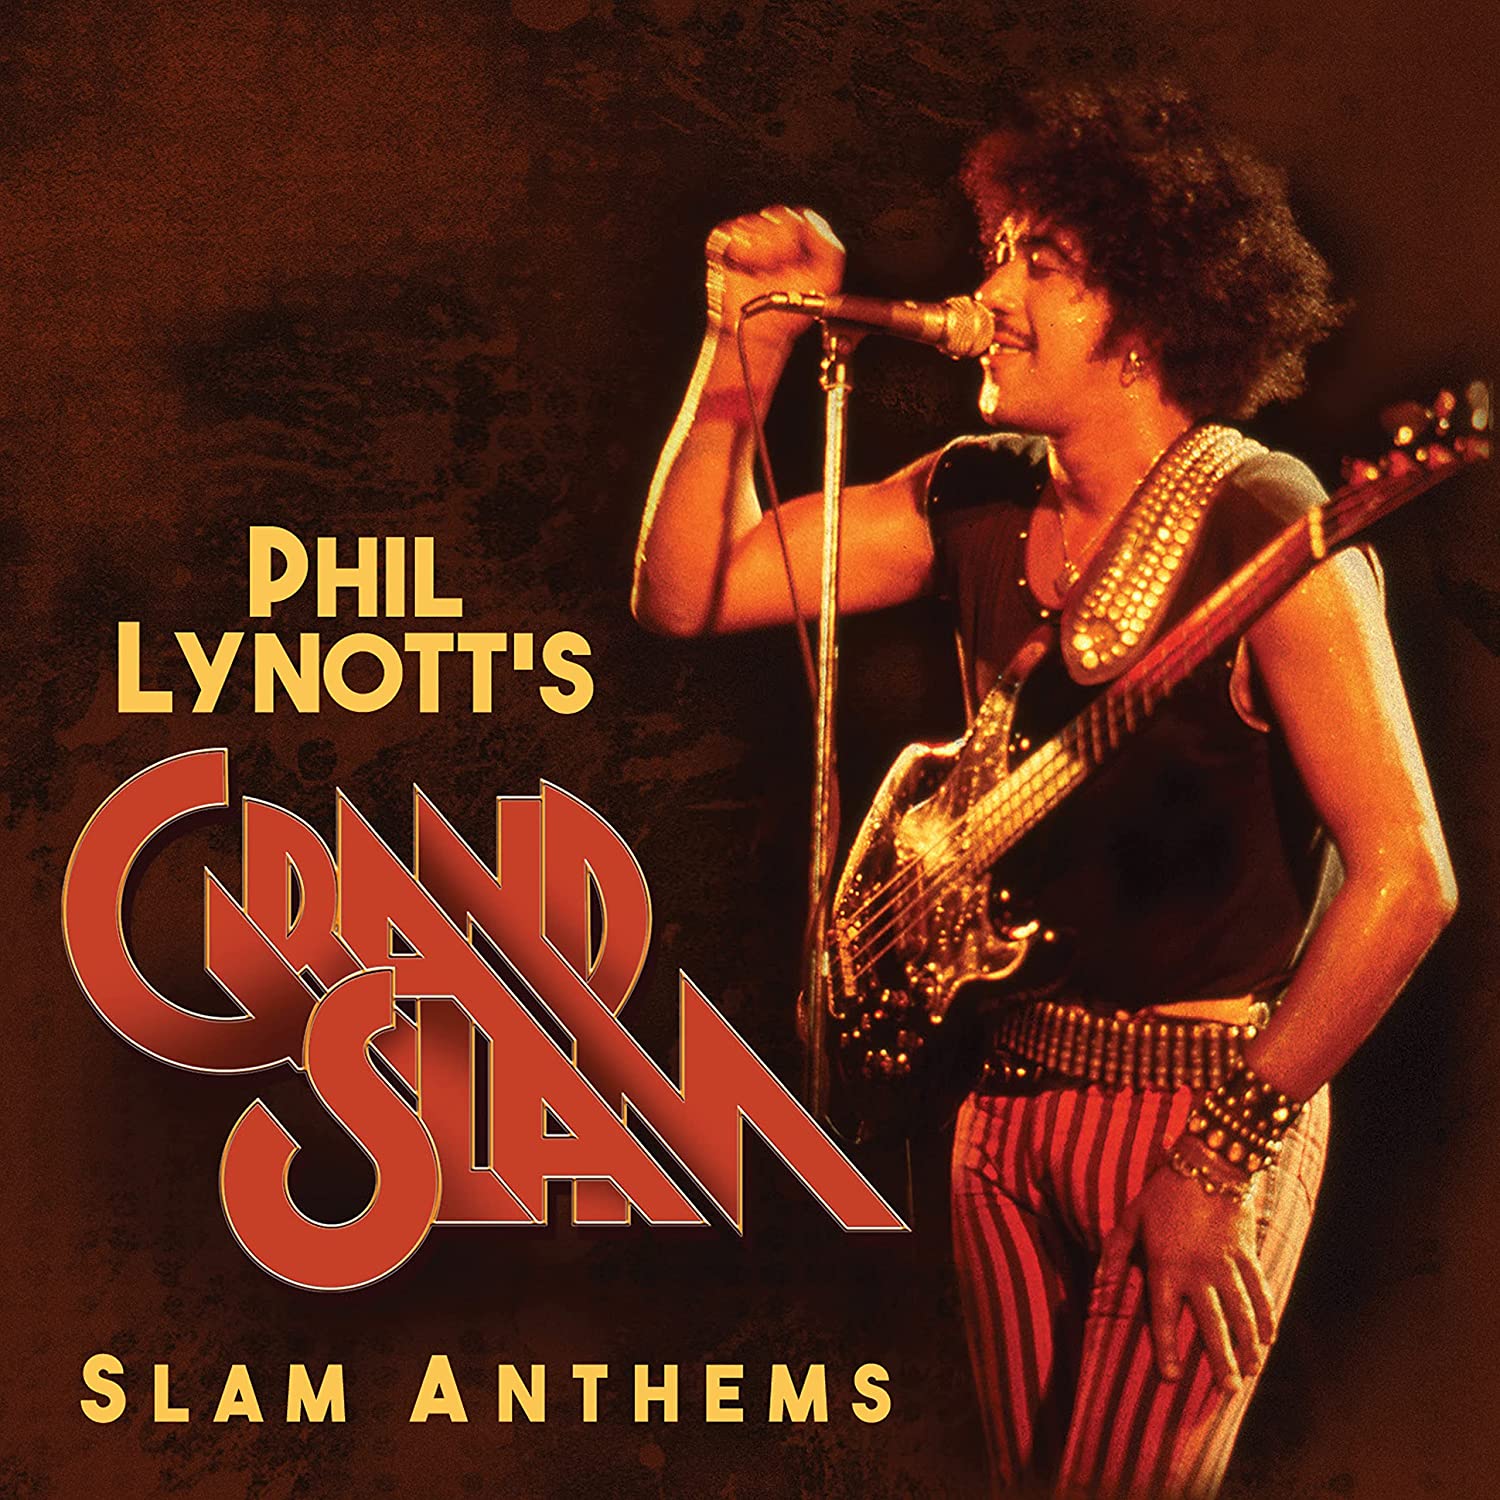 Phil Lynott Box Set, Slam Anthems, Released Best Classic Bands